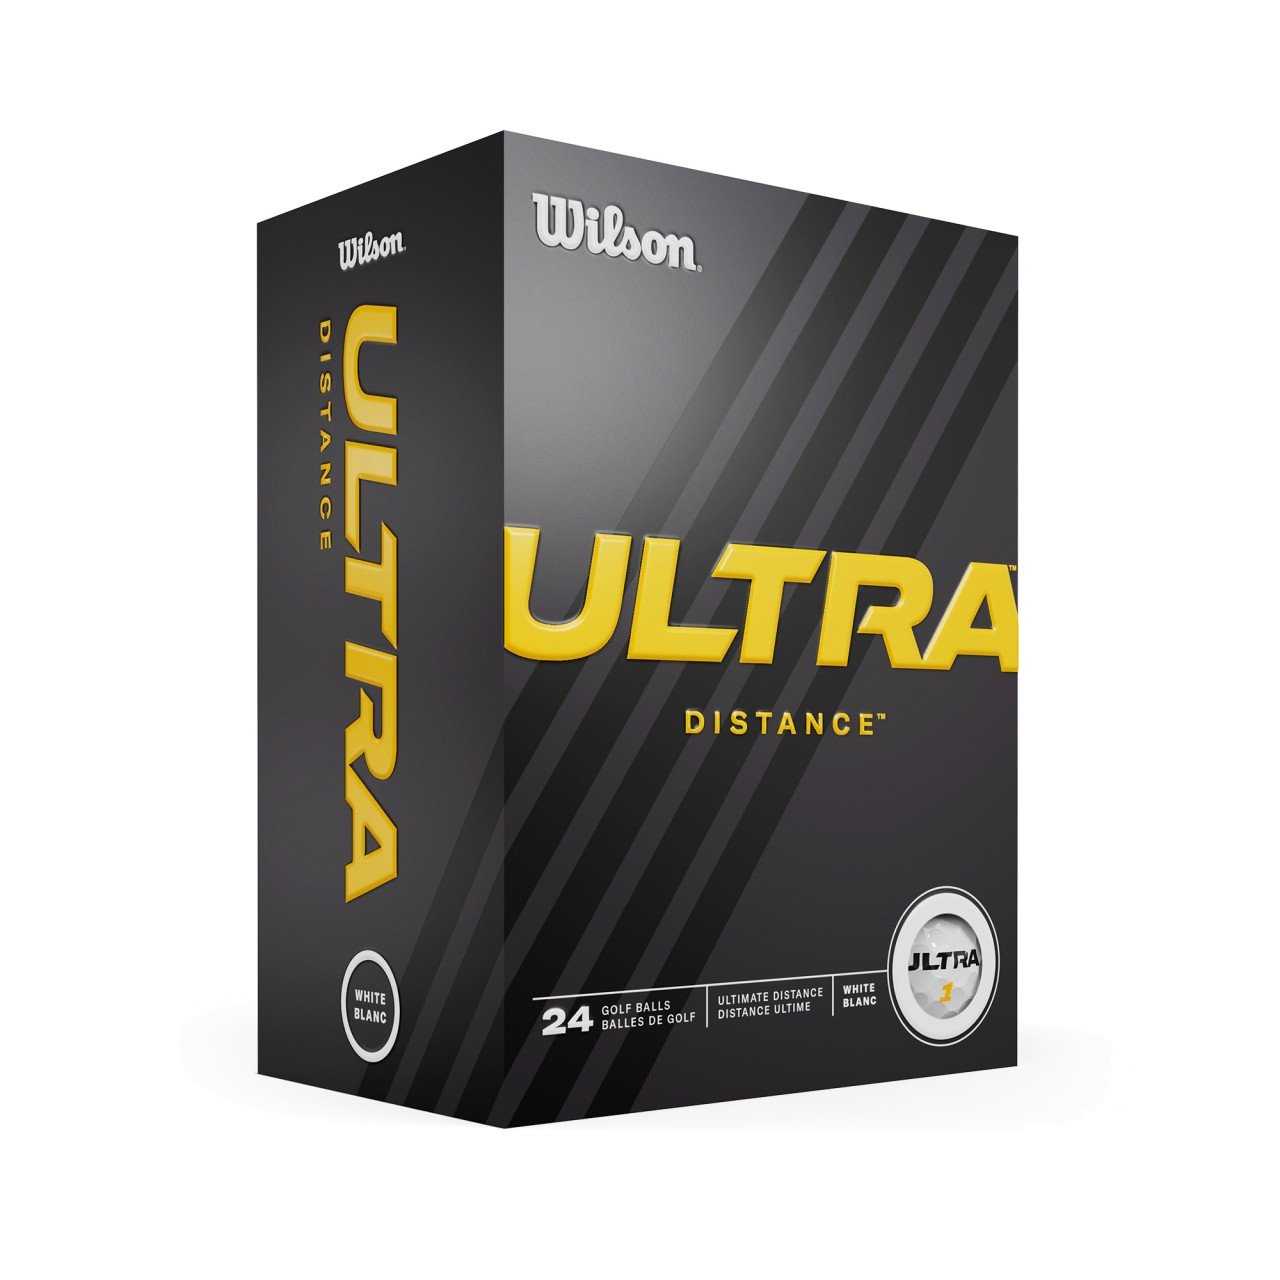 Wilson ULTRA Golfbälle 24er Pack von Ekomi